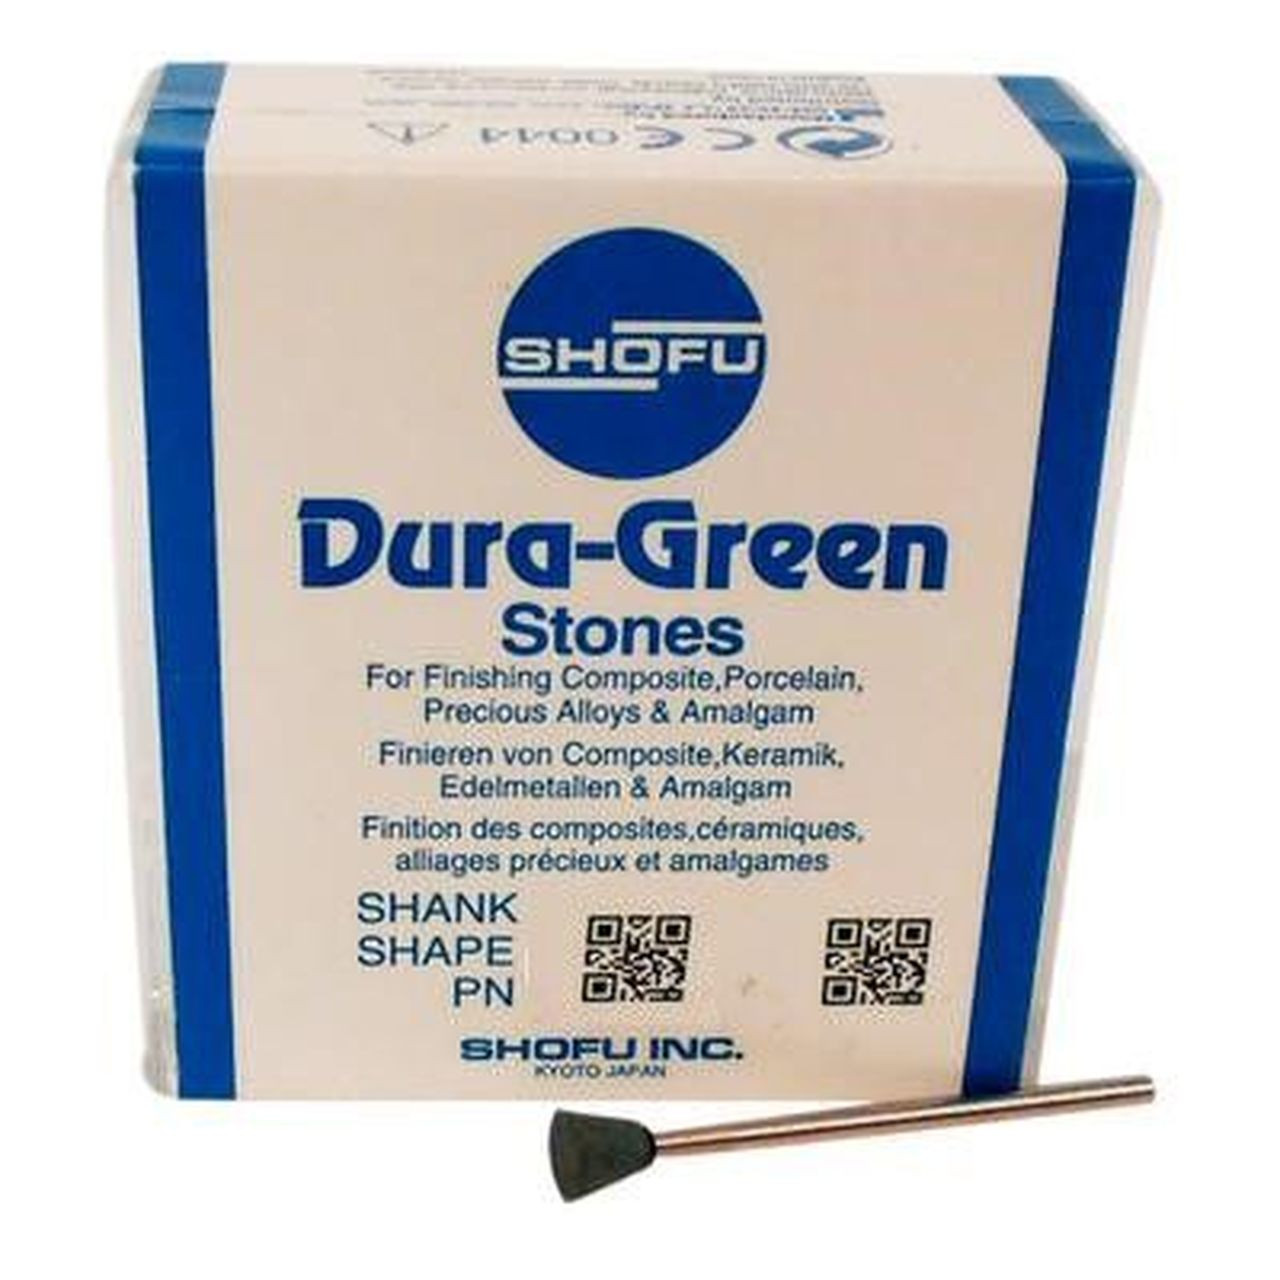 Shofu Dura-Green Stones FG, RD2, 12/pk